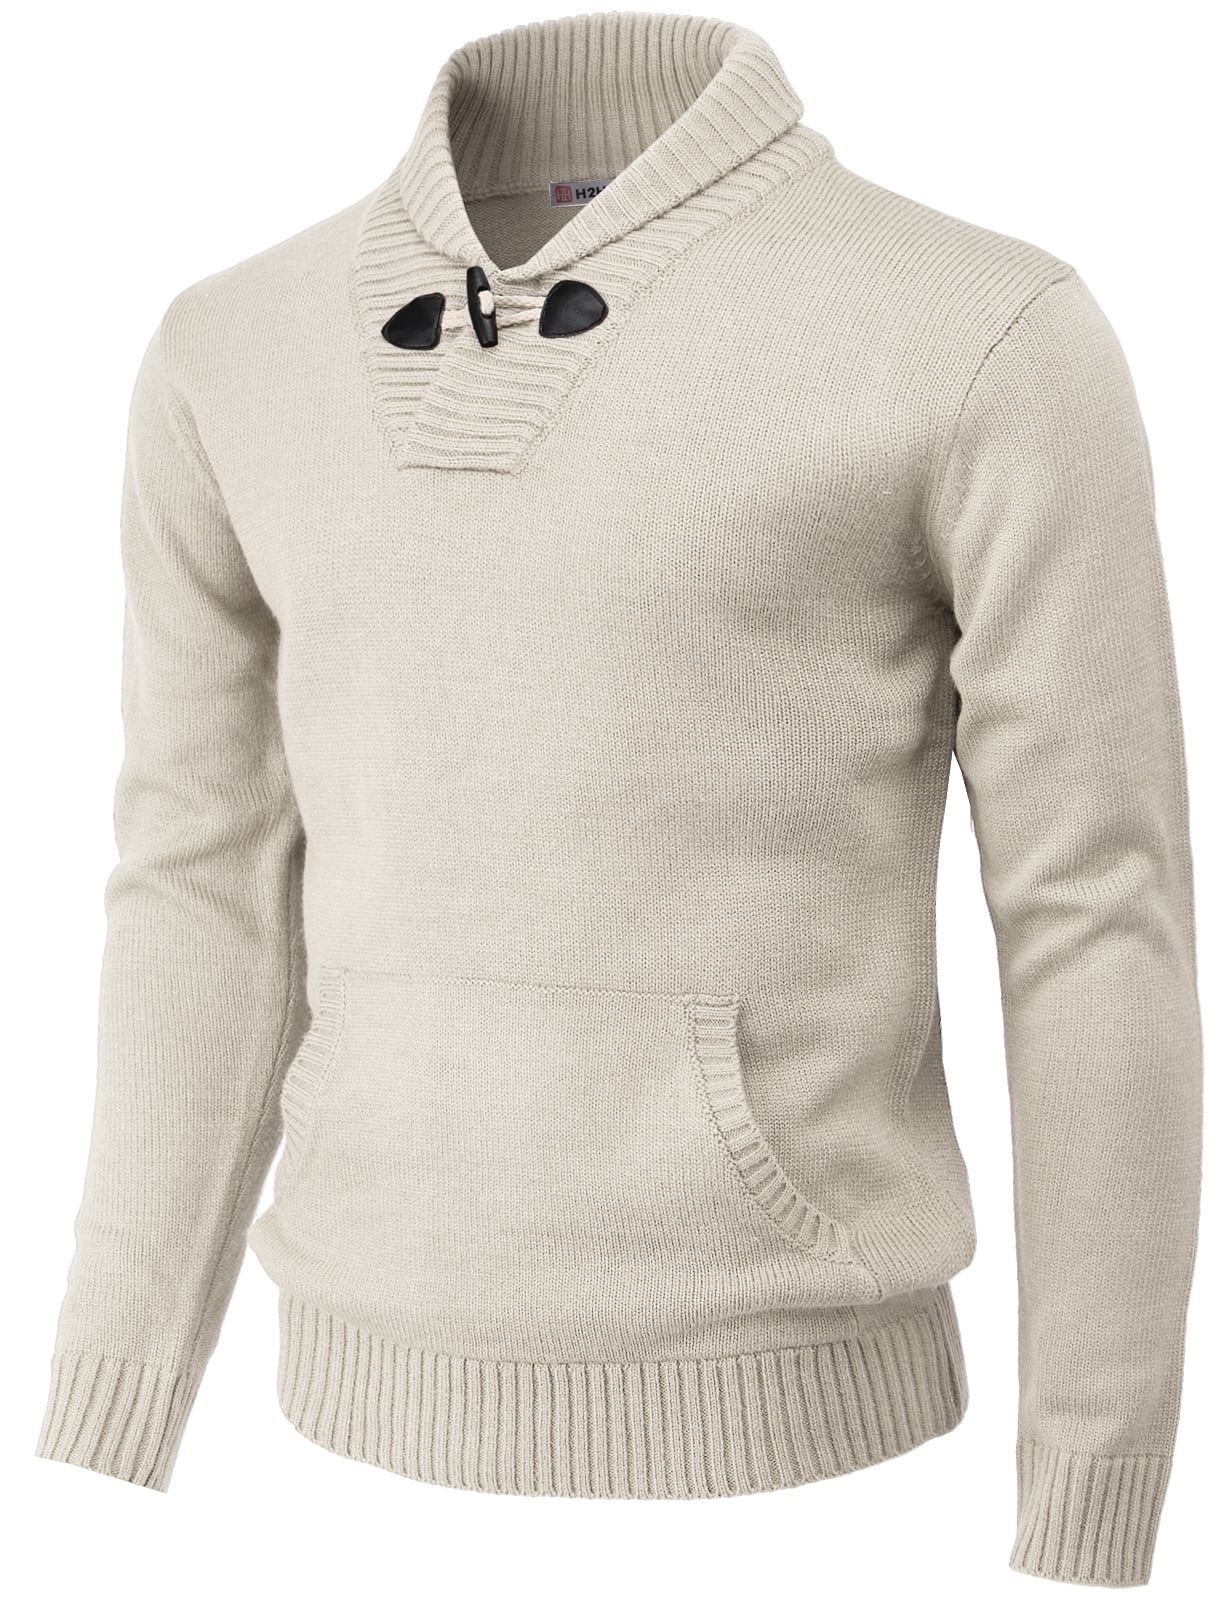 CUTTER & BUCK Mens Half Zip JUMPER Sport Pullover Sweater Jumper WINE Fine Knit 